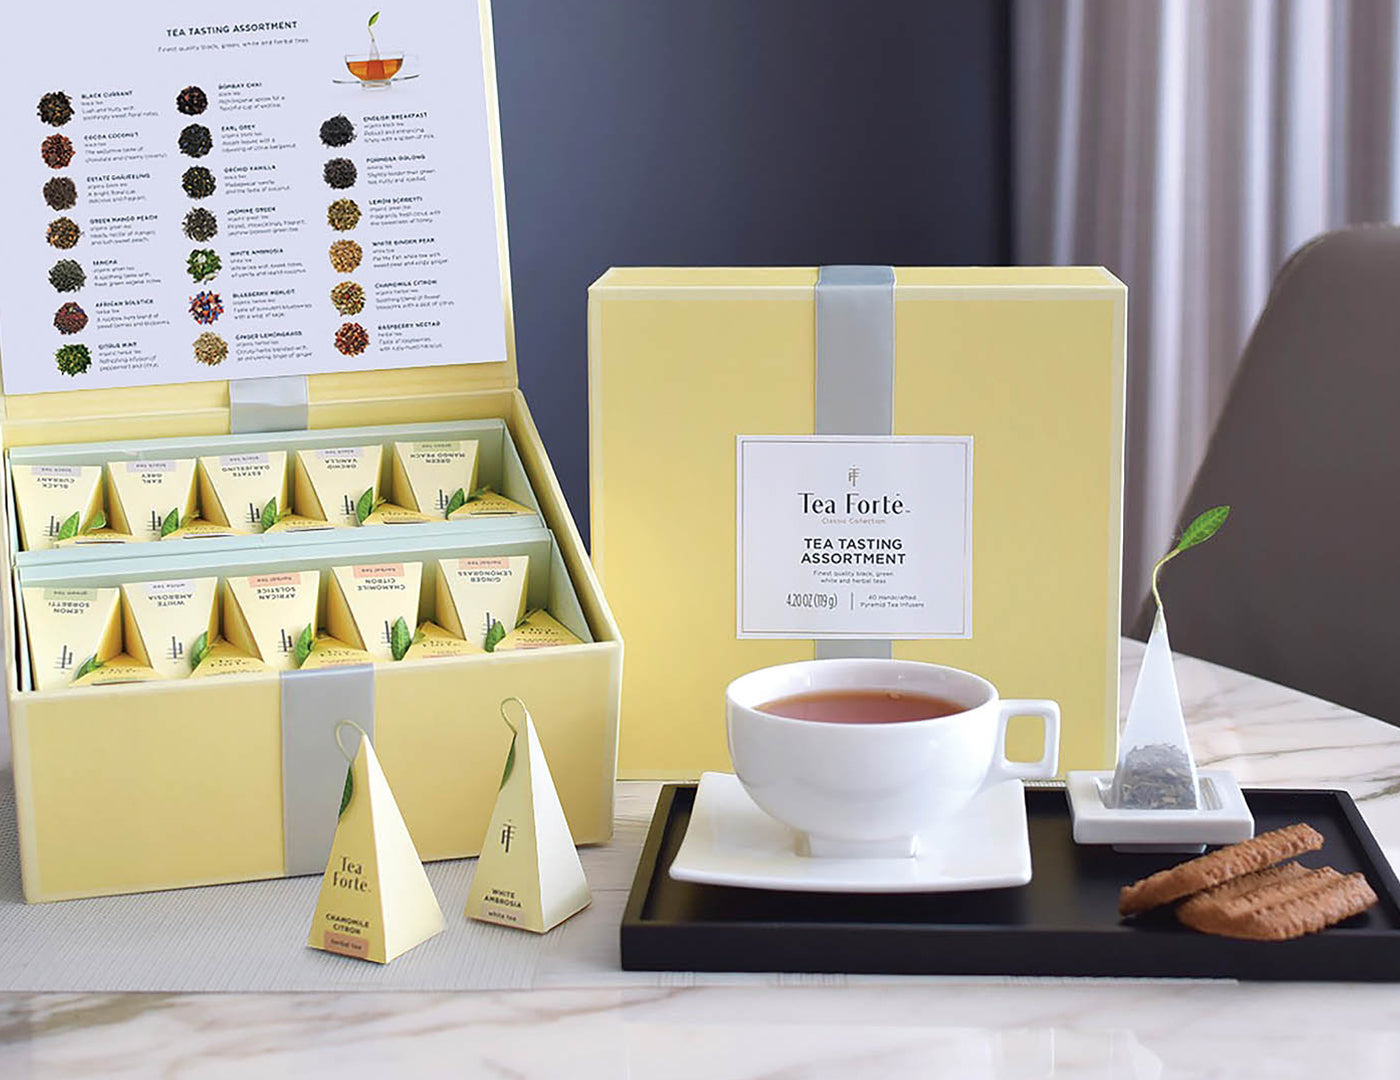 TEA CHEST TEA TASTING ASSORTMENT Tea Forté HK & Macau